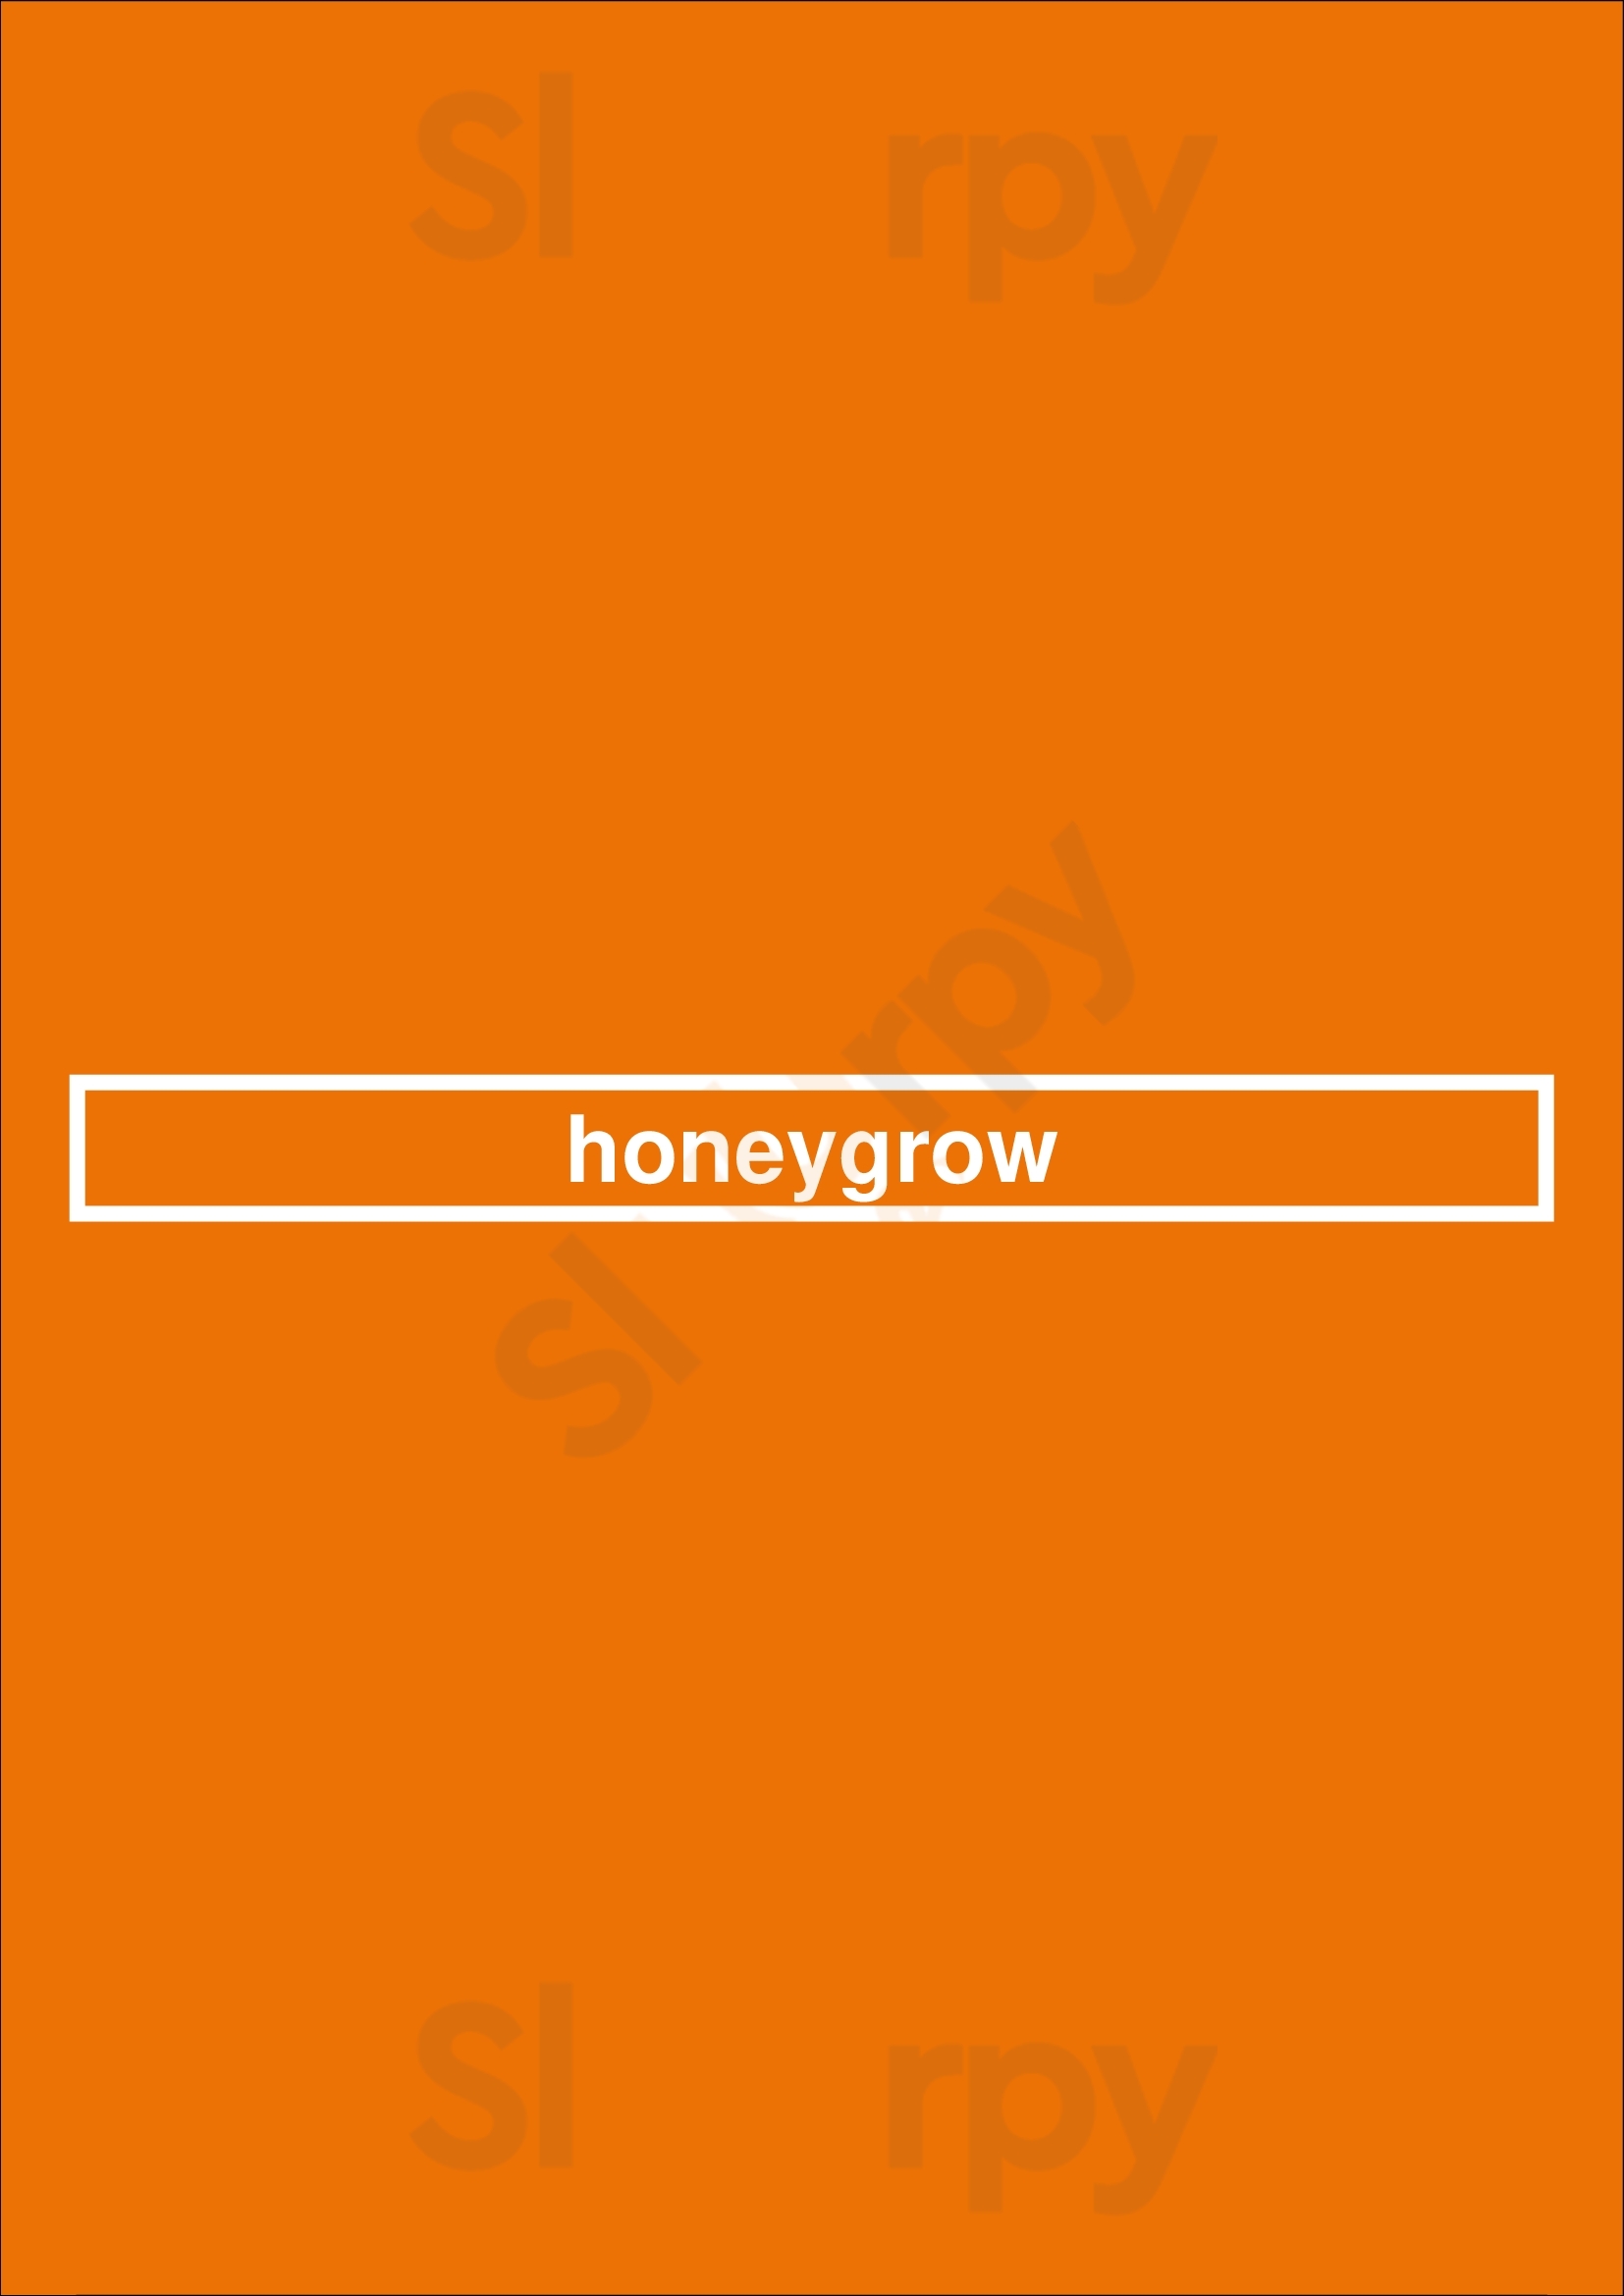 Honeygrow Philadelphia Menu - 1